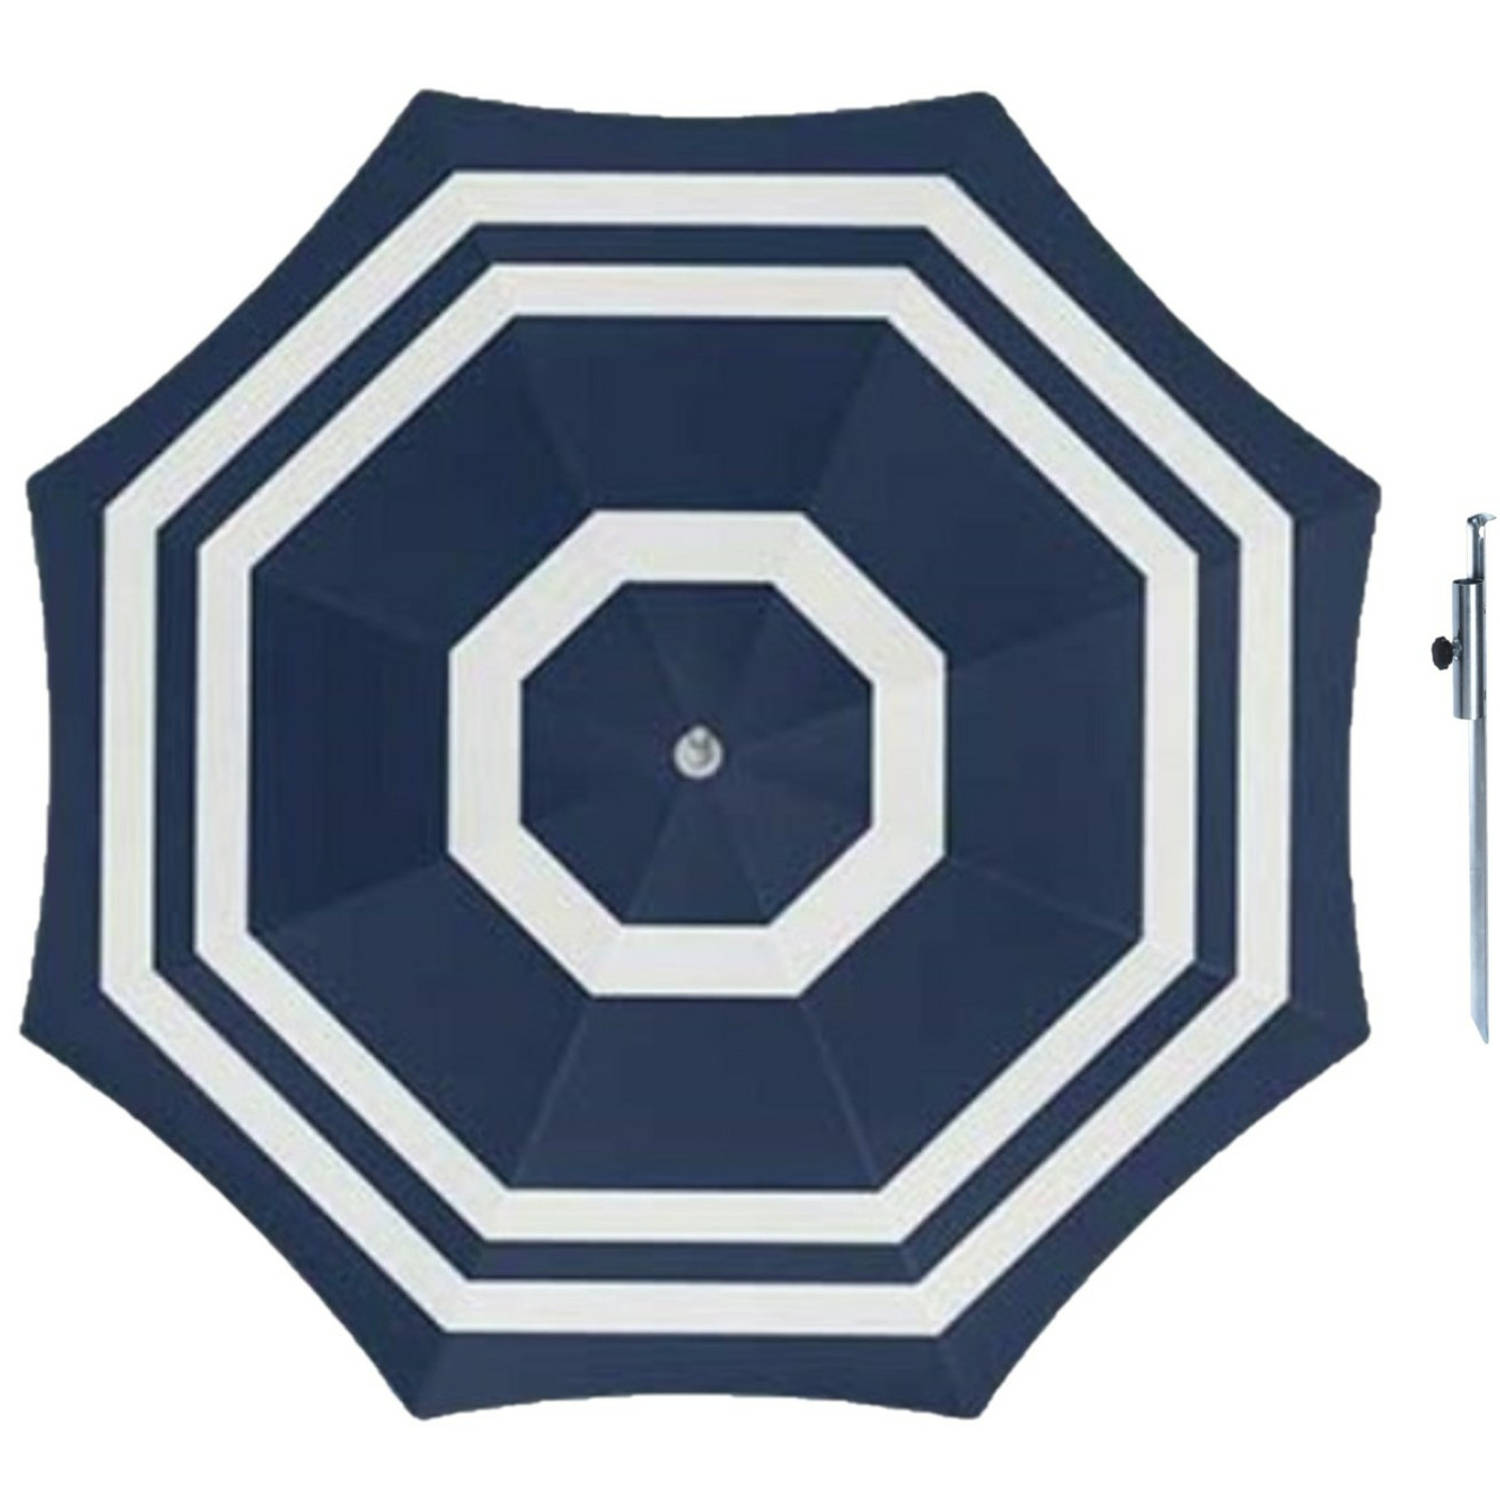 Parasol Blauw-wit D120 cm incl. draagtas parasolharing 49 cm Parasols